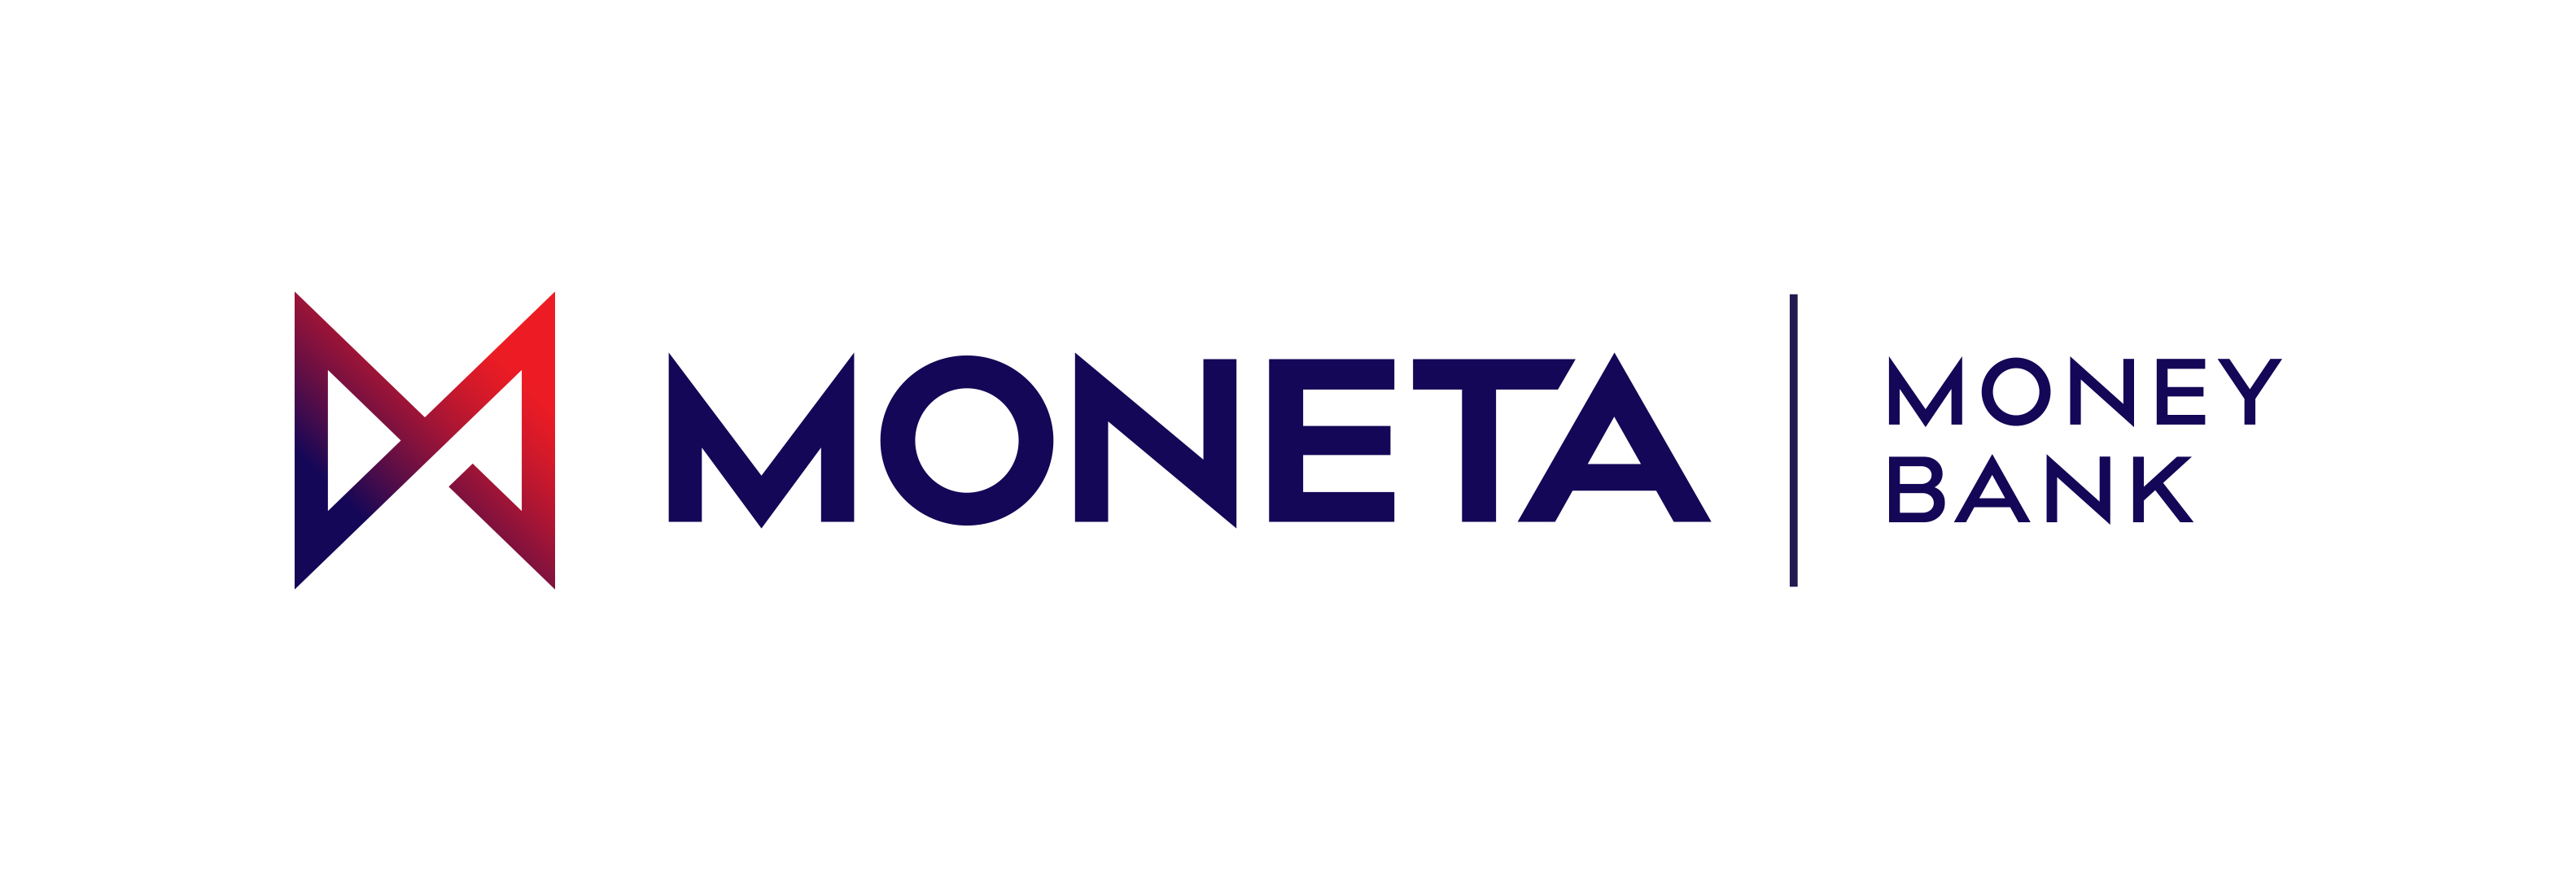 MONETA Money Bank | Byznys pro spoleÄnost